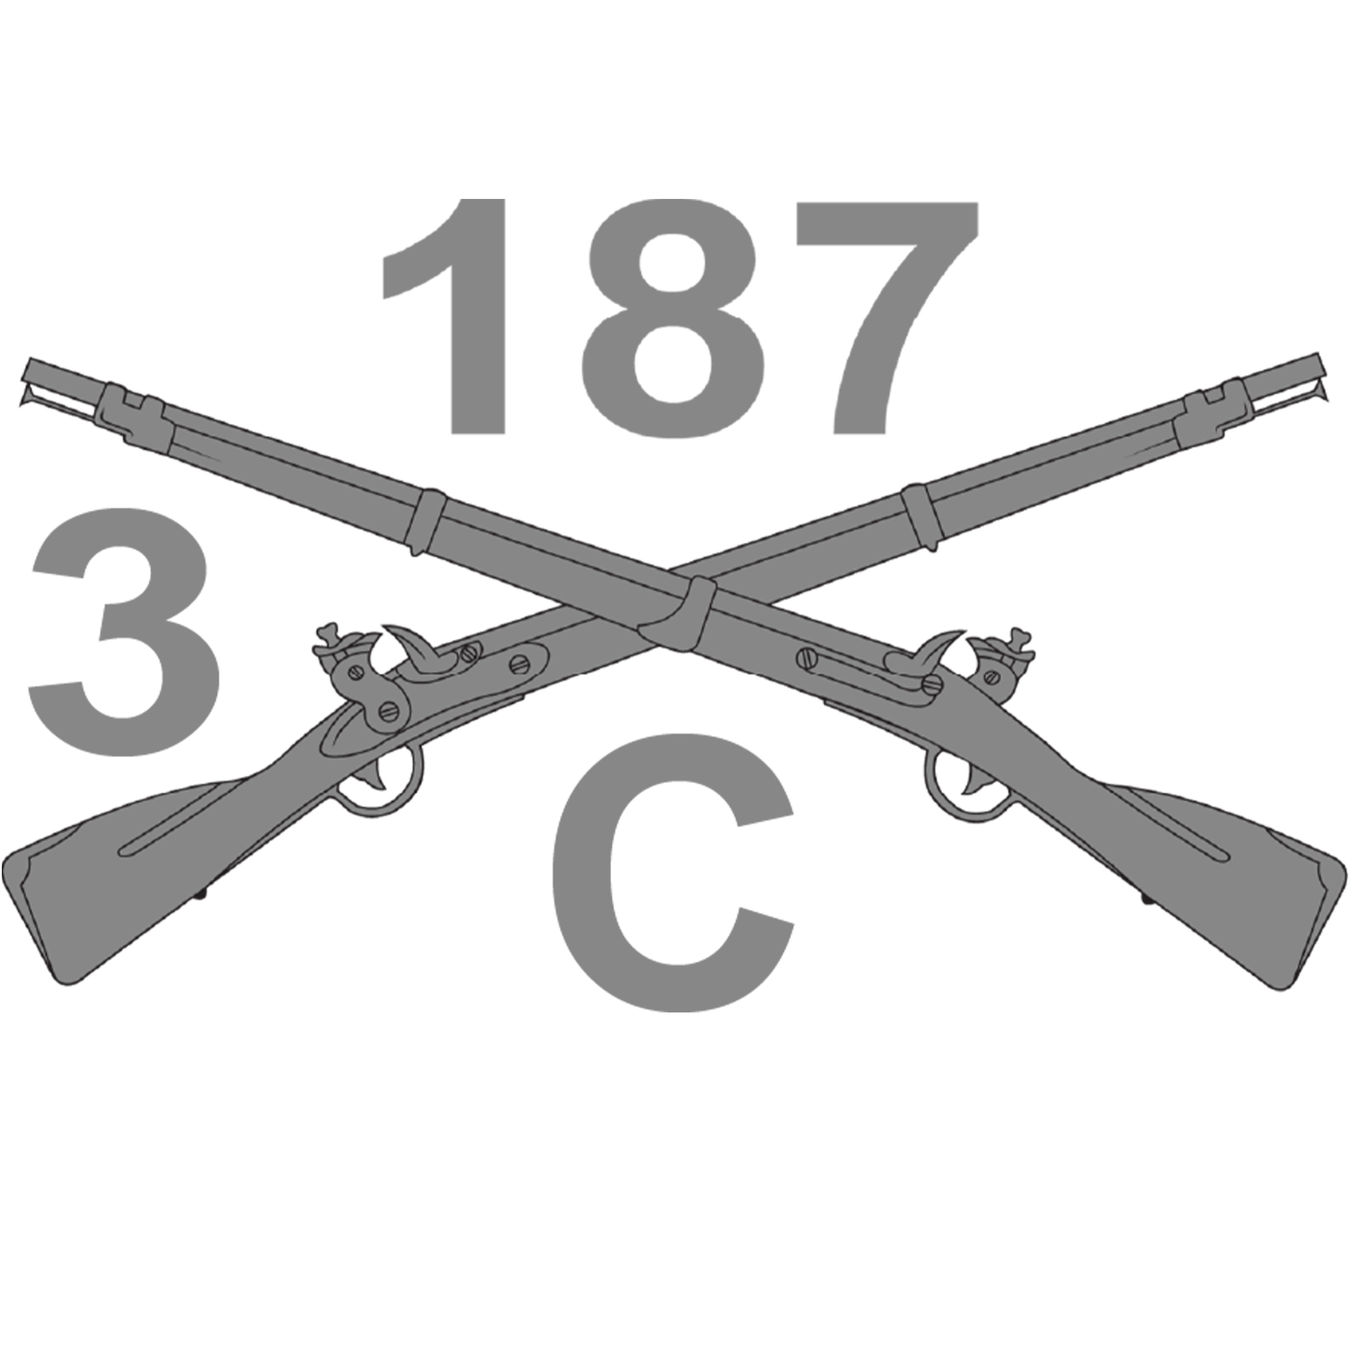 C Co 3-187 Infantry Regiment Merchandise